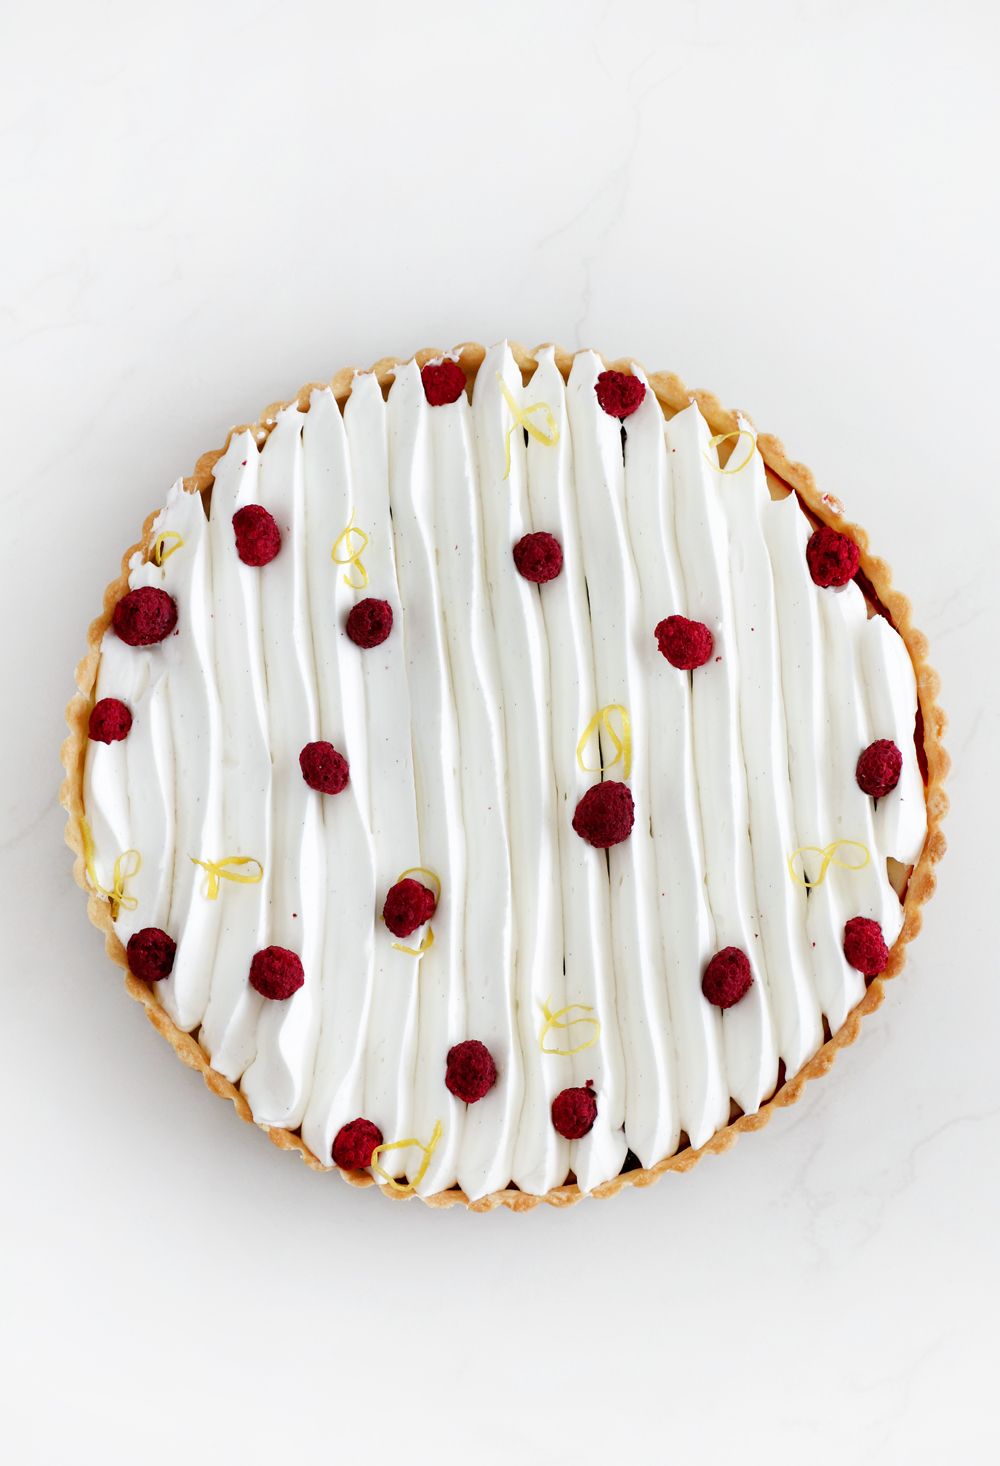 Raspberry Lemon Tart with Vanilla Cream